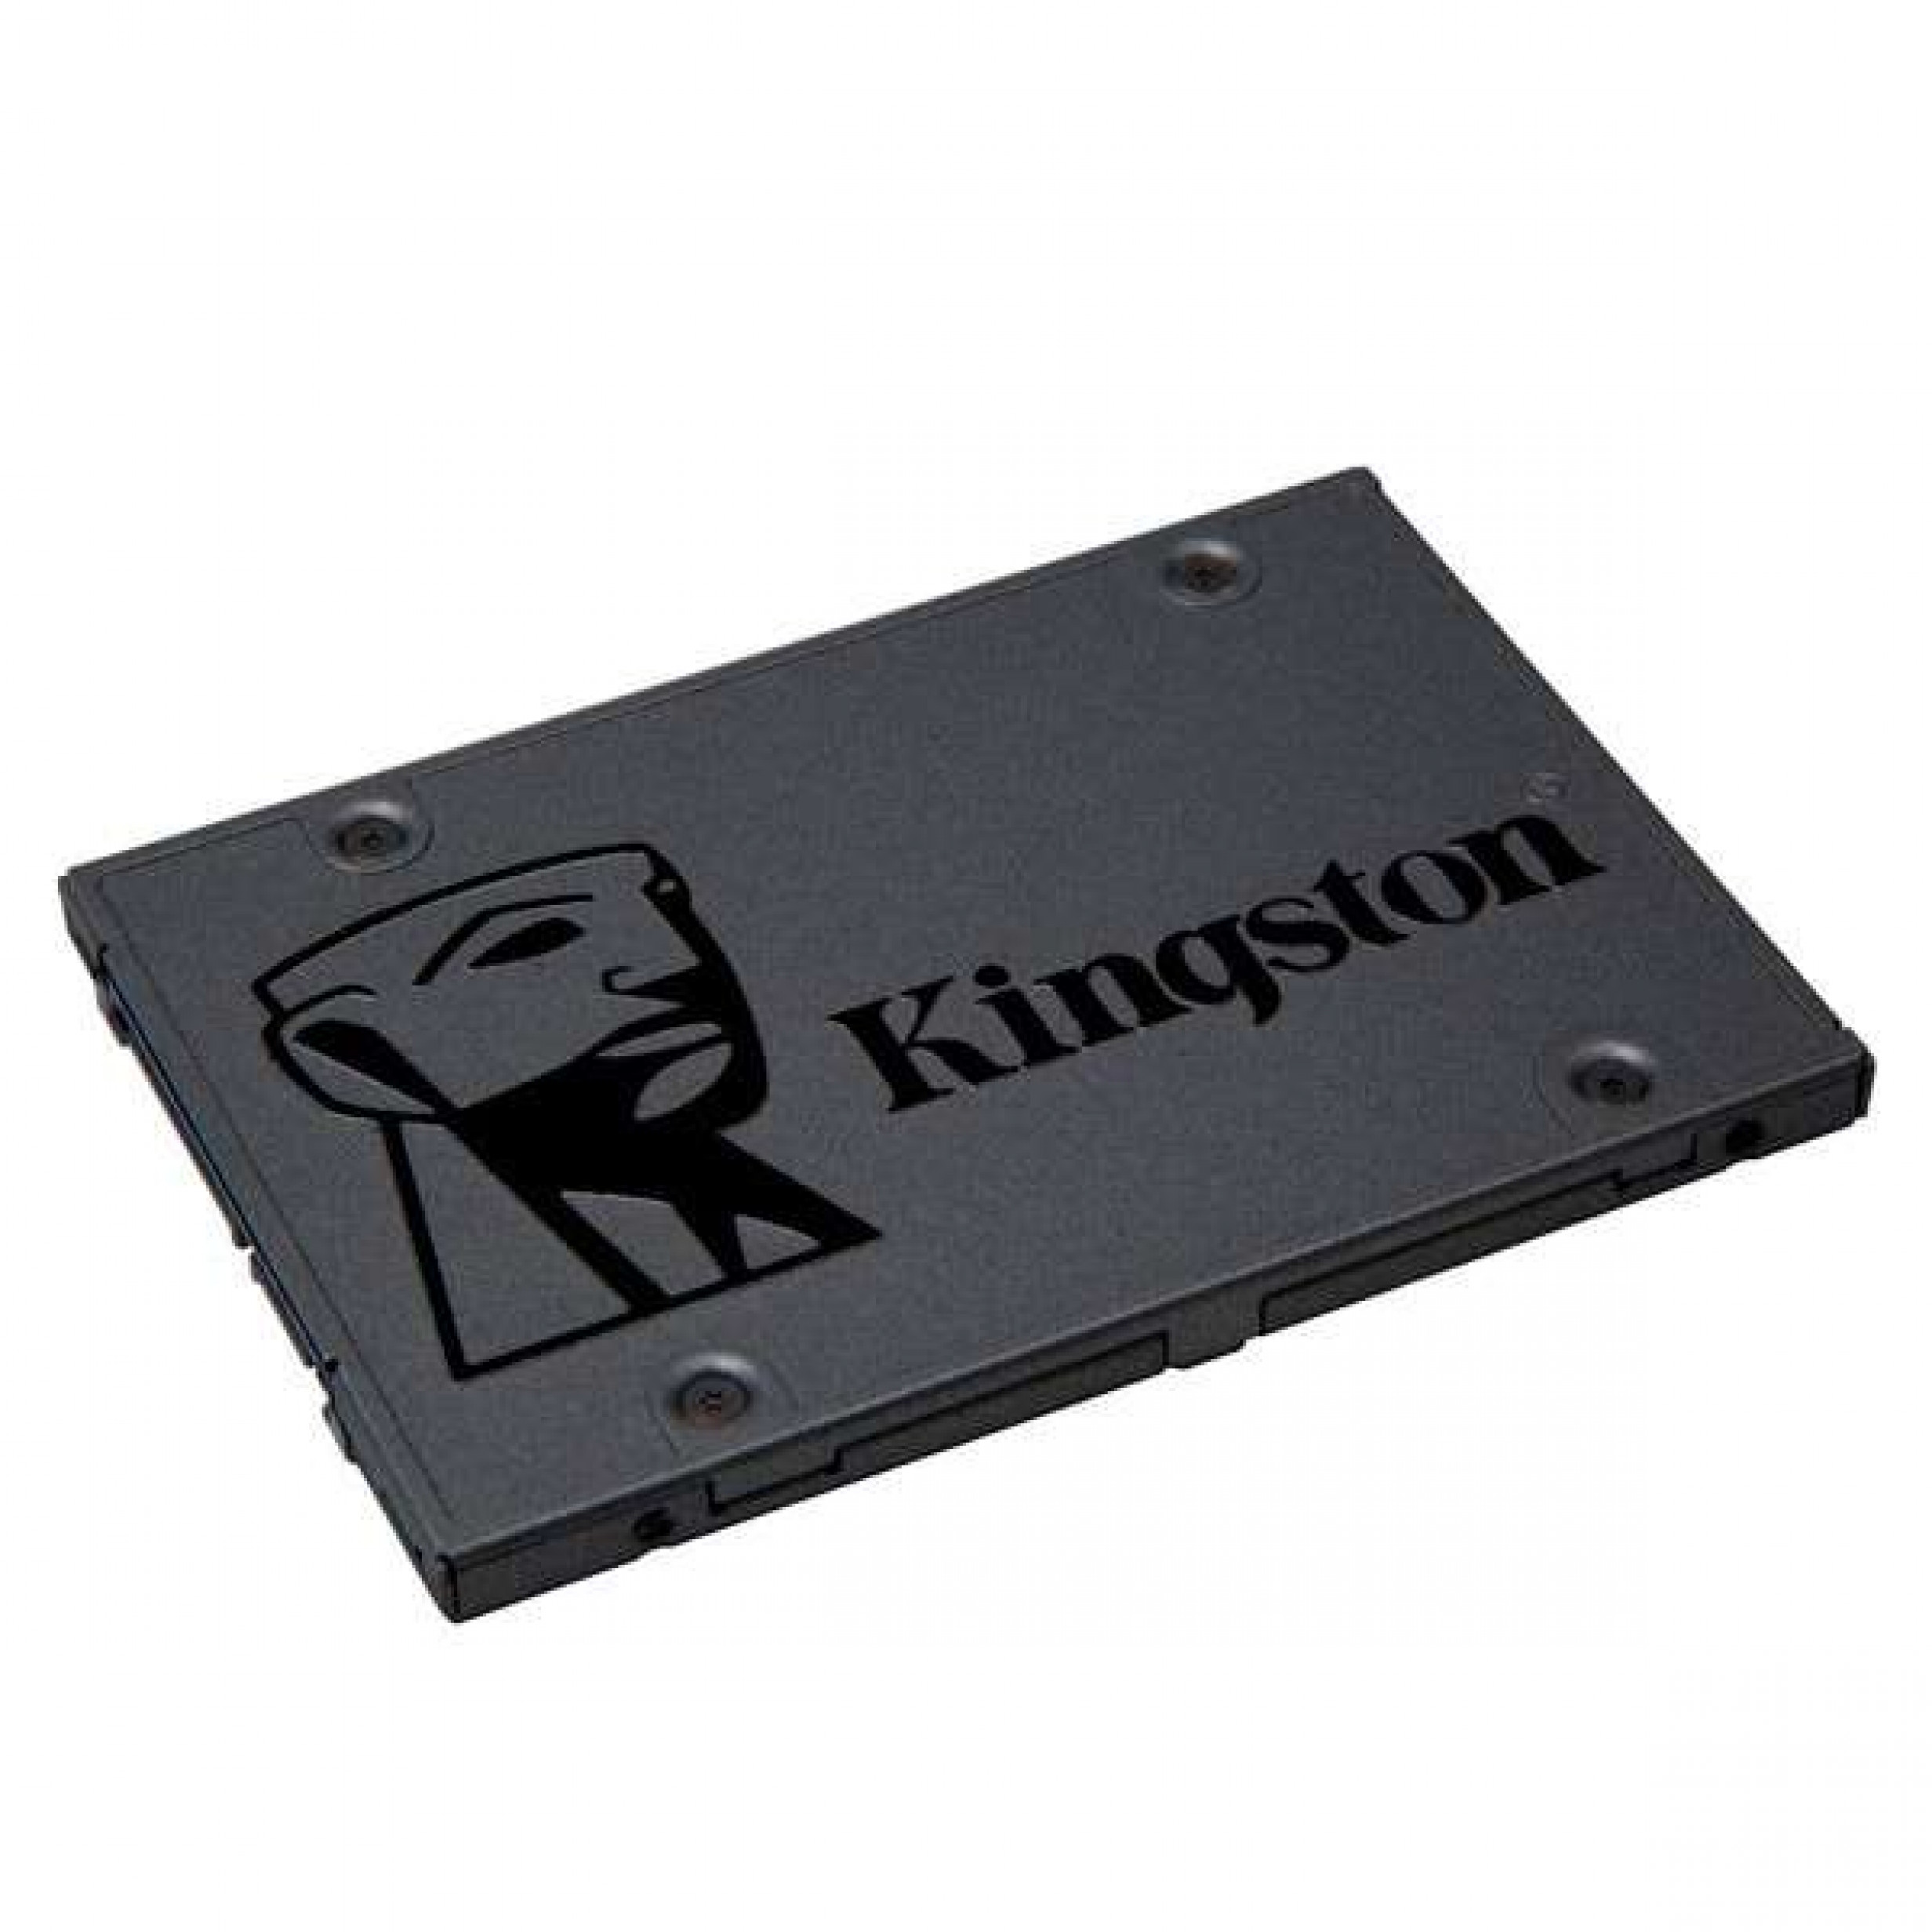 KINGSTON 240 GB A400 SSDNow SA400S37/240G 2.5" SATA 3.0 SSD